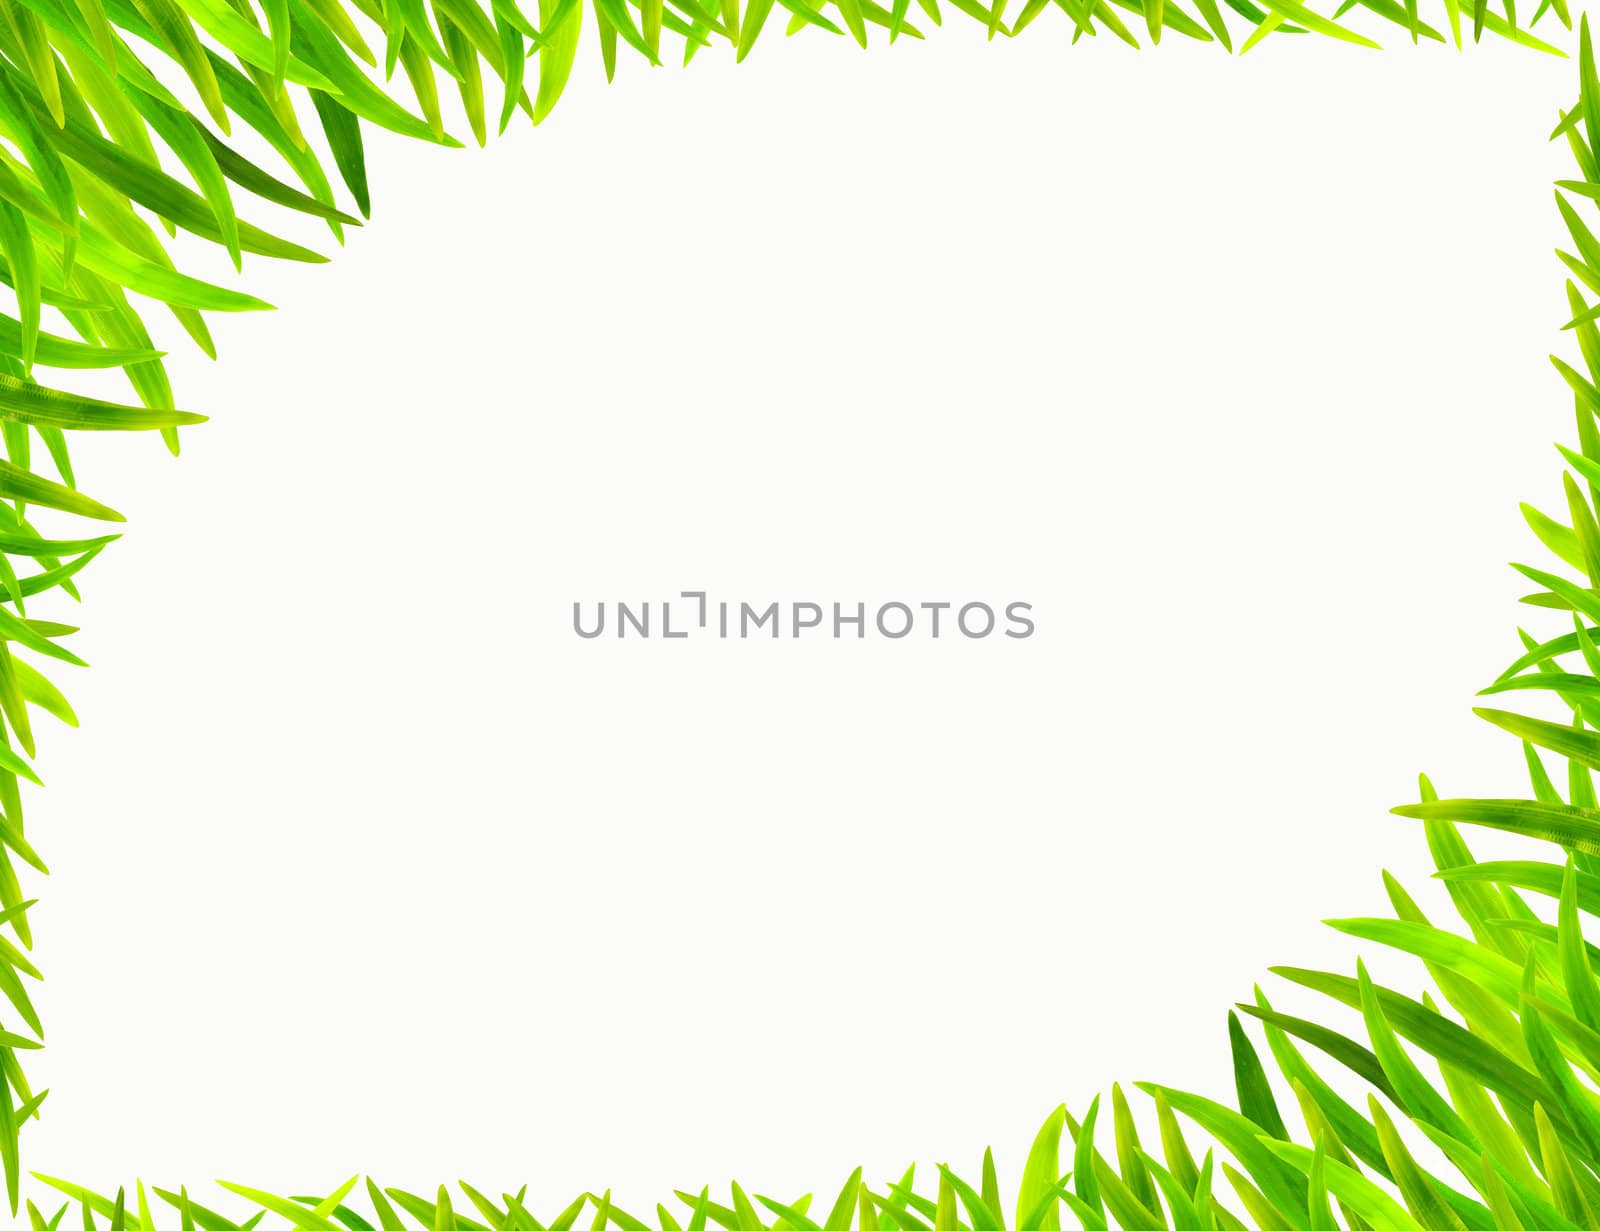 Grass frame in white background by bajita111122